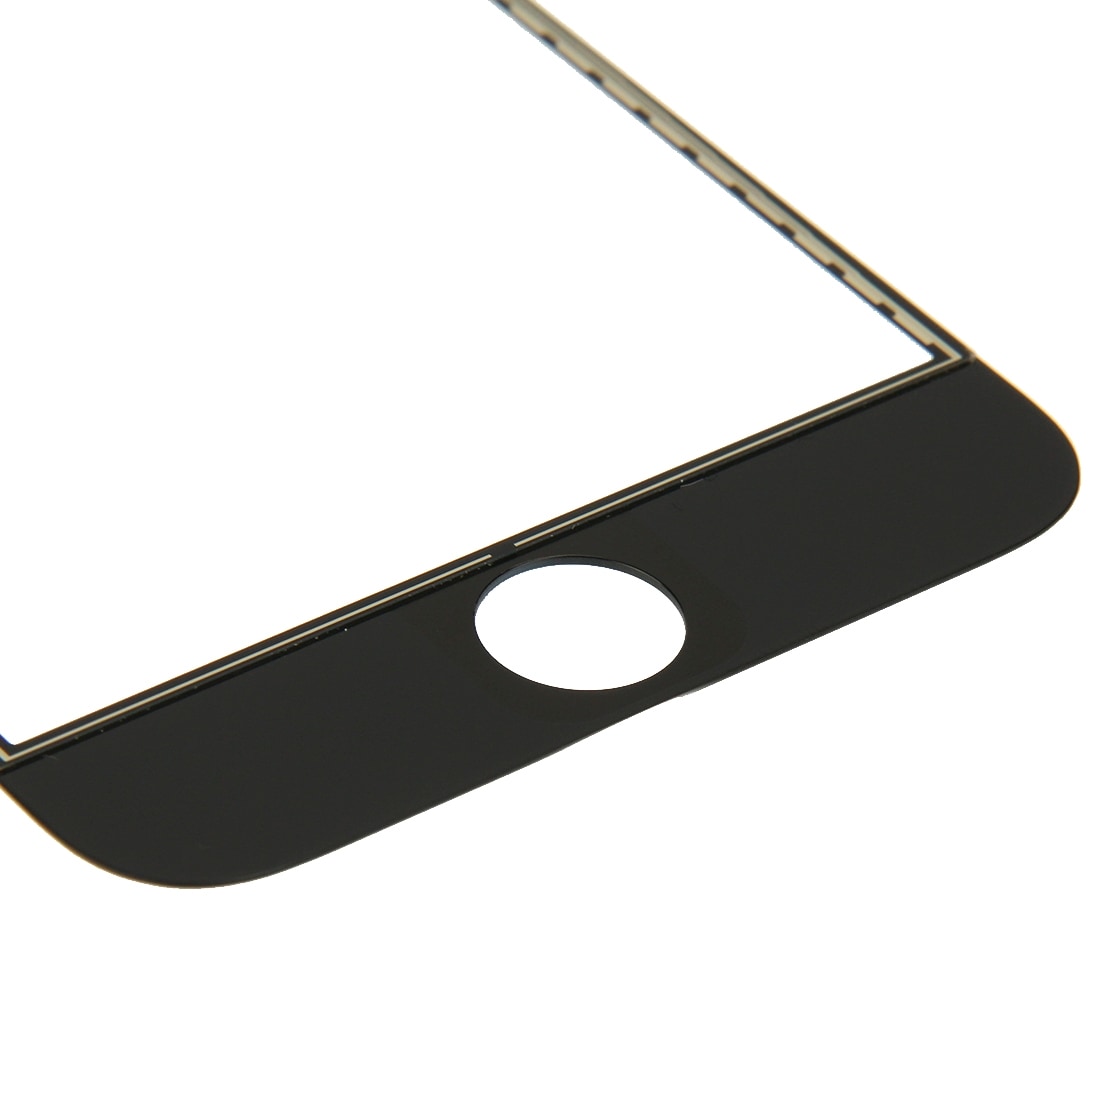 Glaslins, Touch enhet & Flexkabel iPhone 6 - svart färg